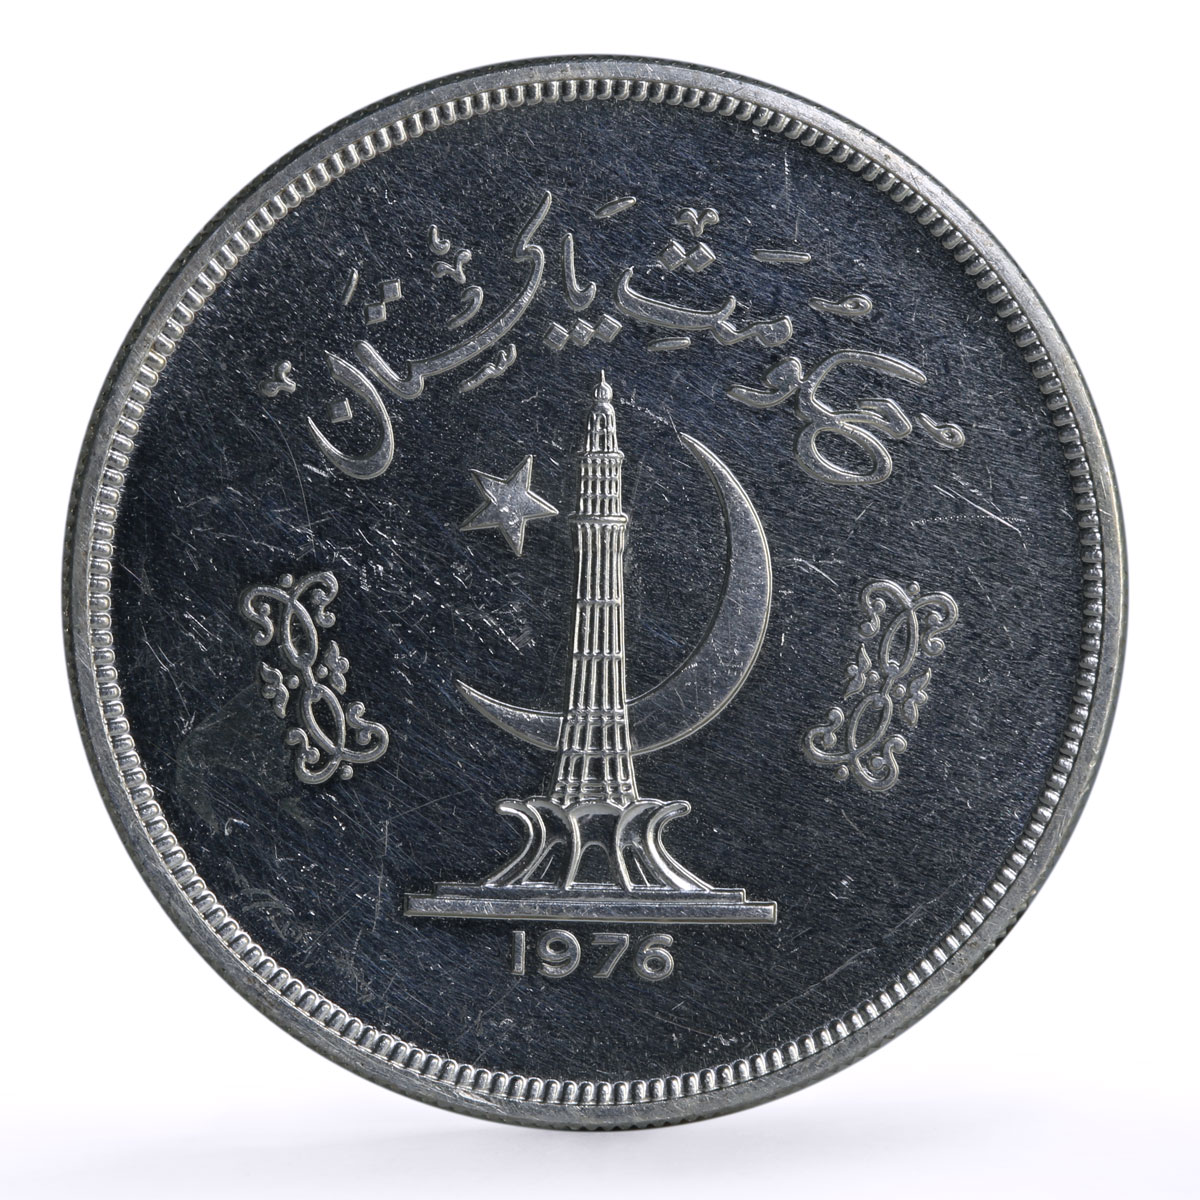 Pakistan 150 rupees WWF series Gavial Crocodile silver coin 1976